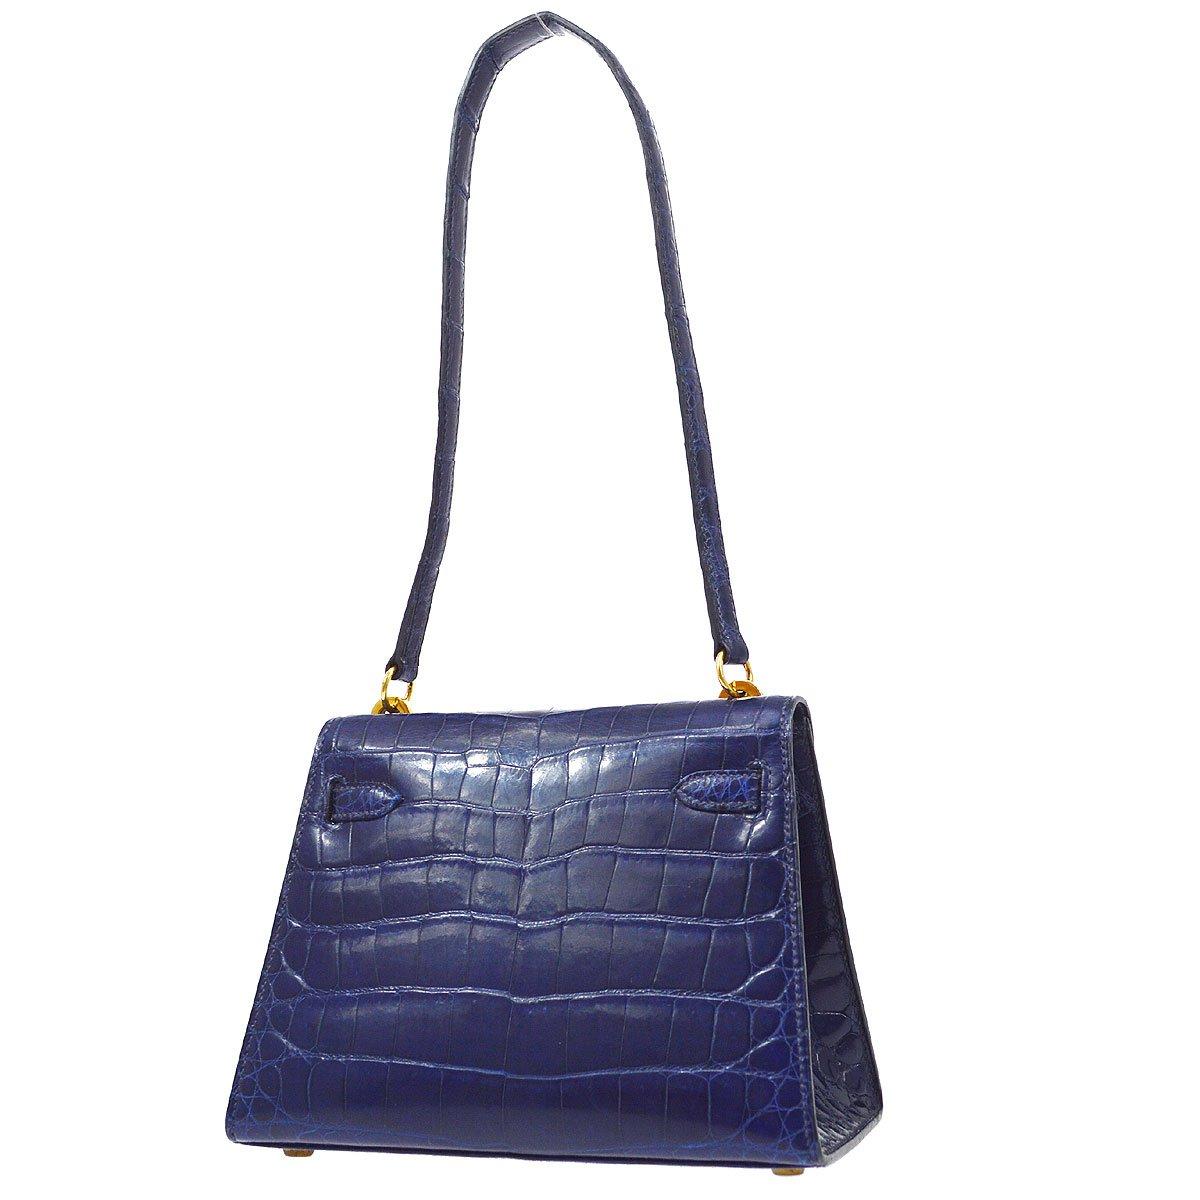 discount 73% WOMEN FASHION Bags Shoulder bag Party Navy Blue Single NoName Shoulder bag 